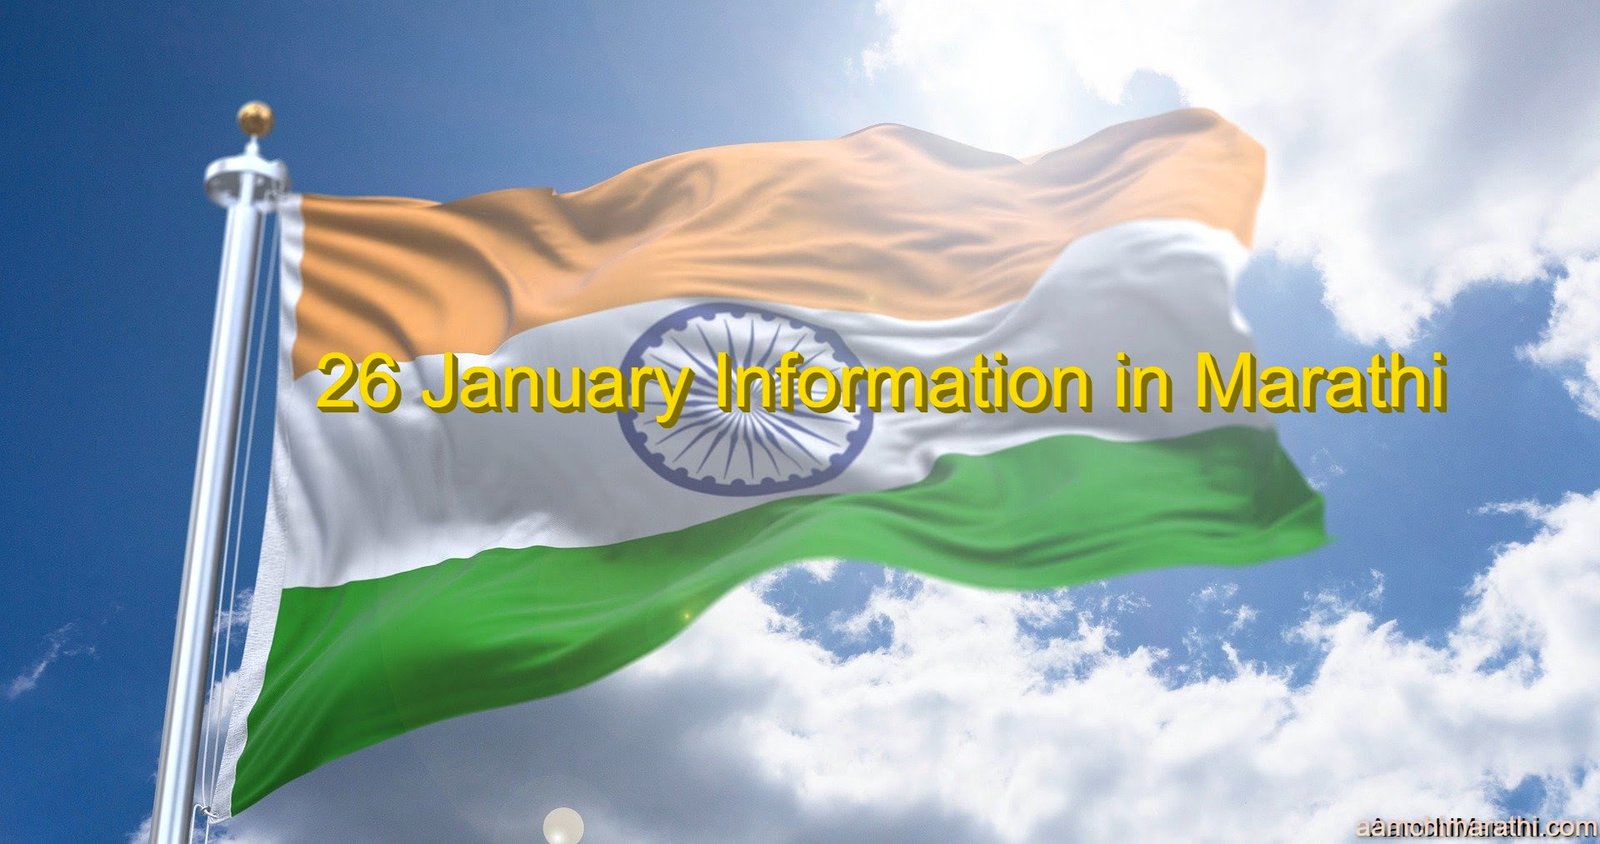 26 January Information in Marathi